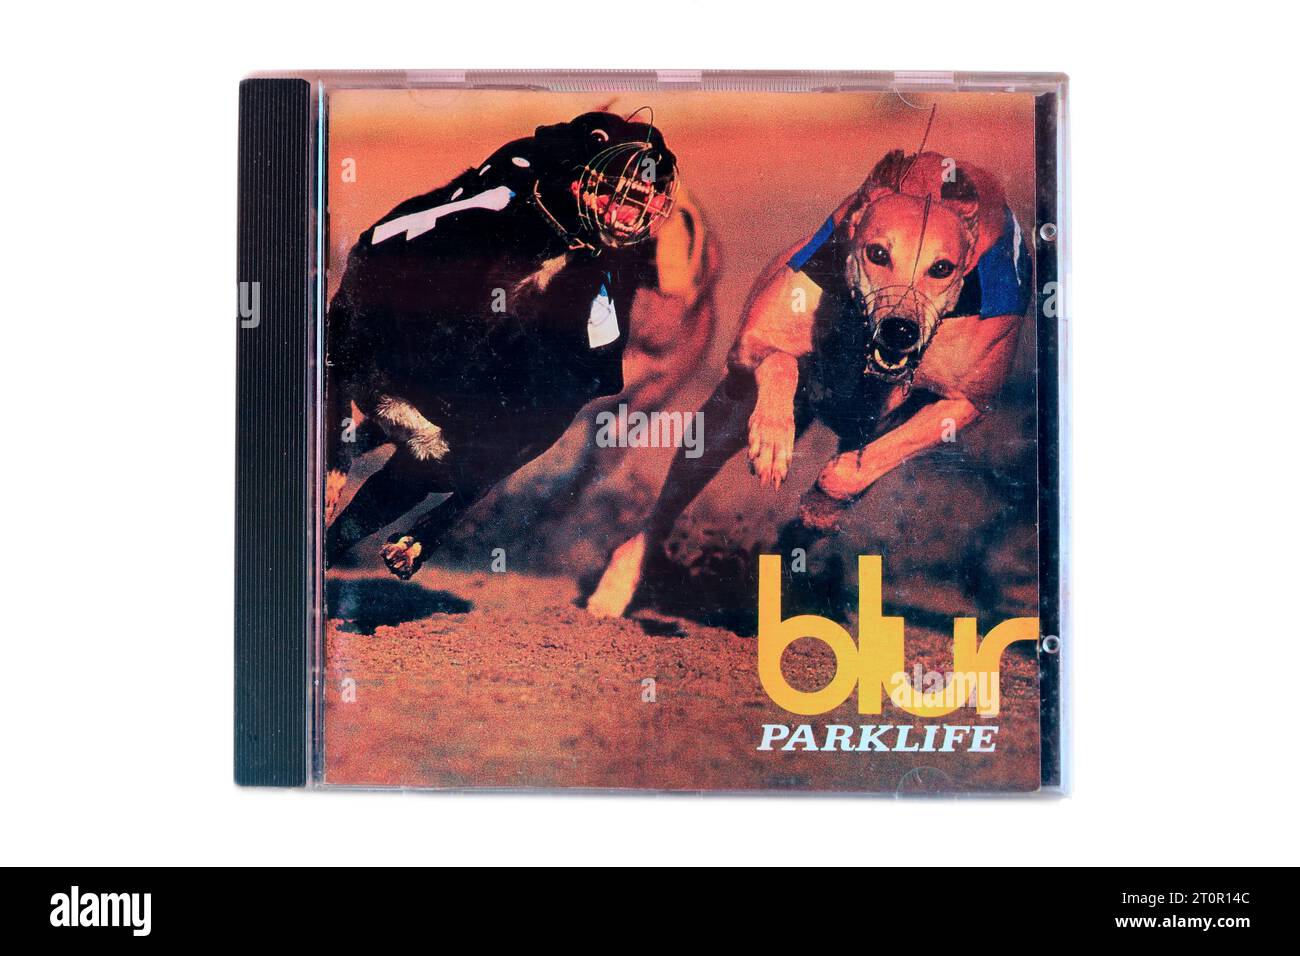 Blur - Parklife CD case on light background Stock Photo